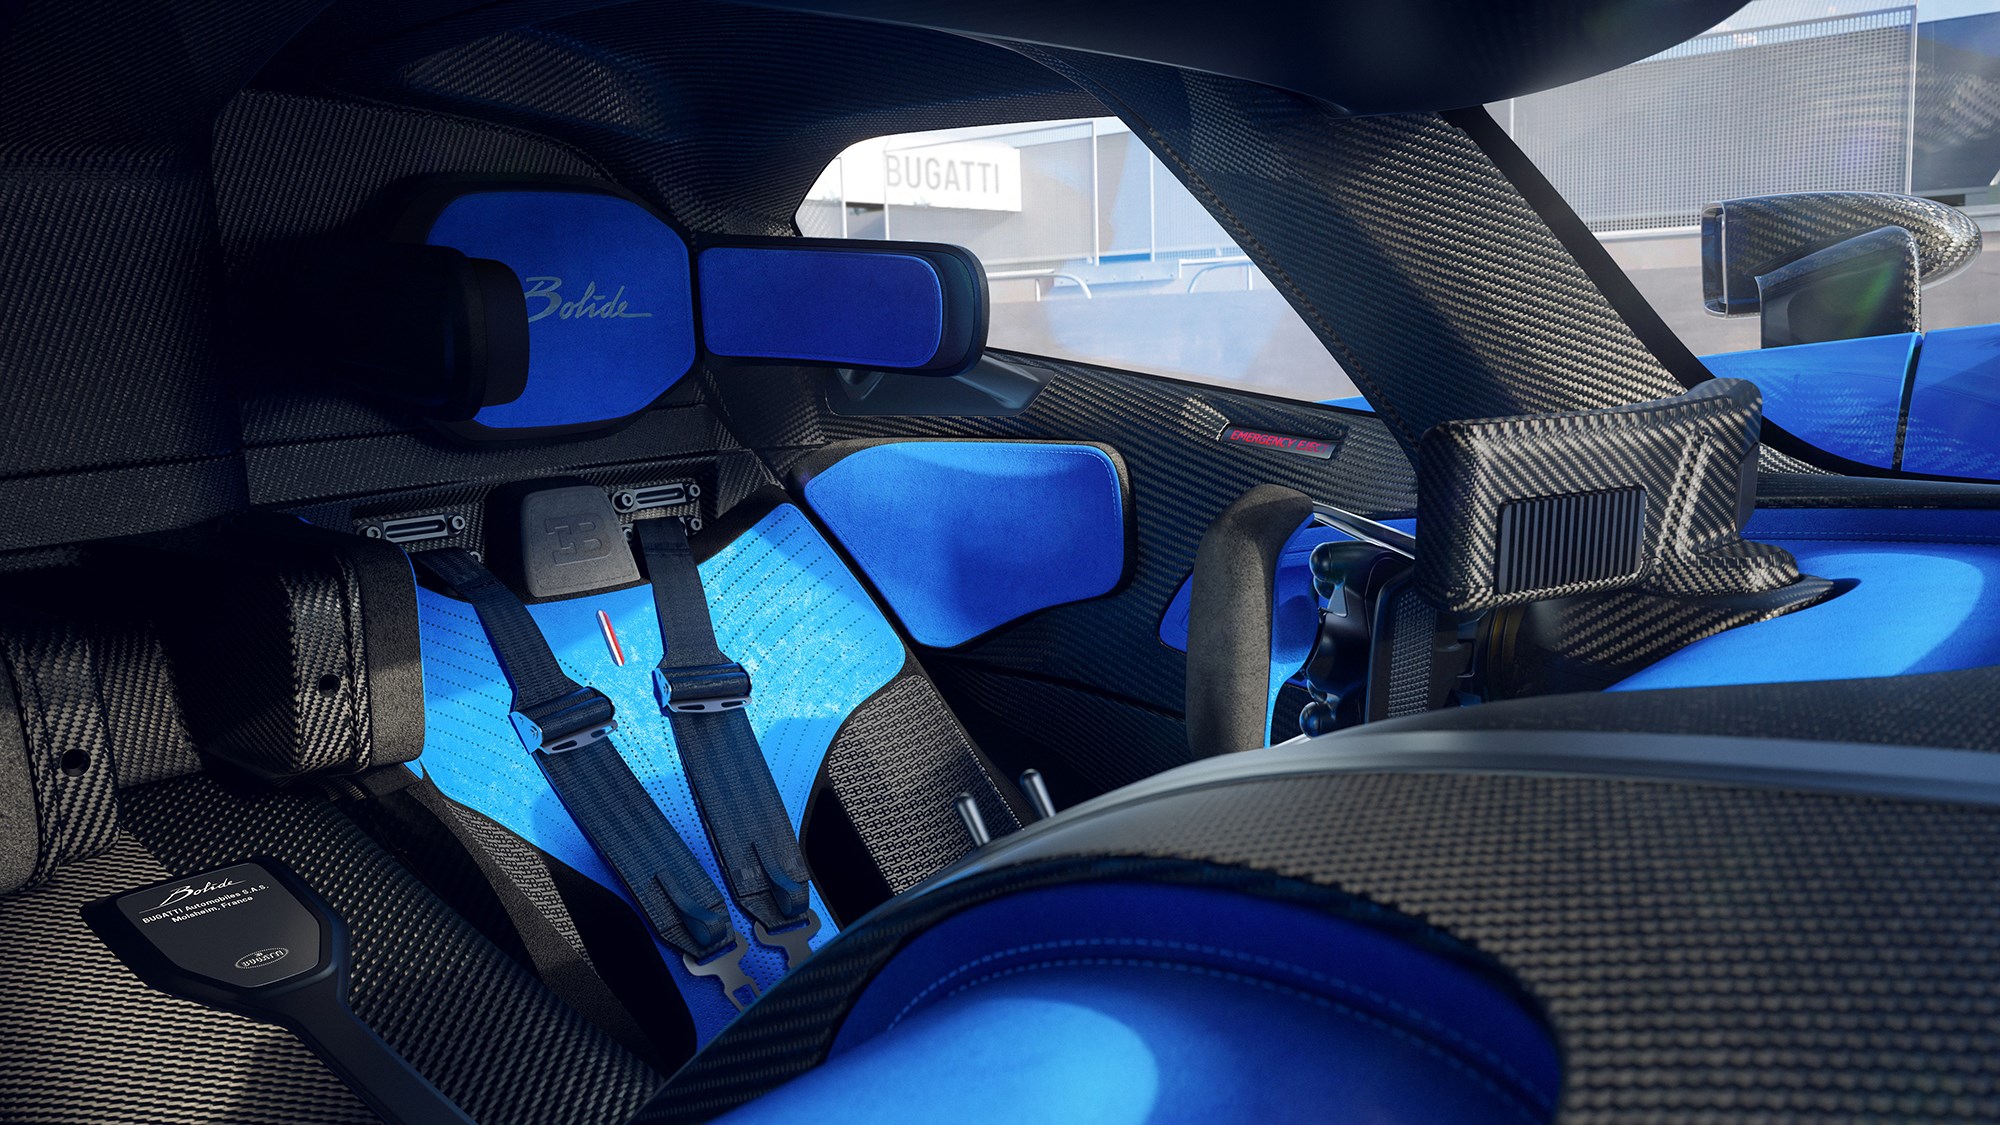 Inside the Bolide: interior of 1825bhp Bugatti hypercar revealed